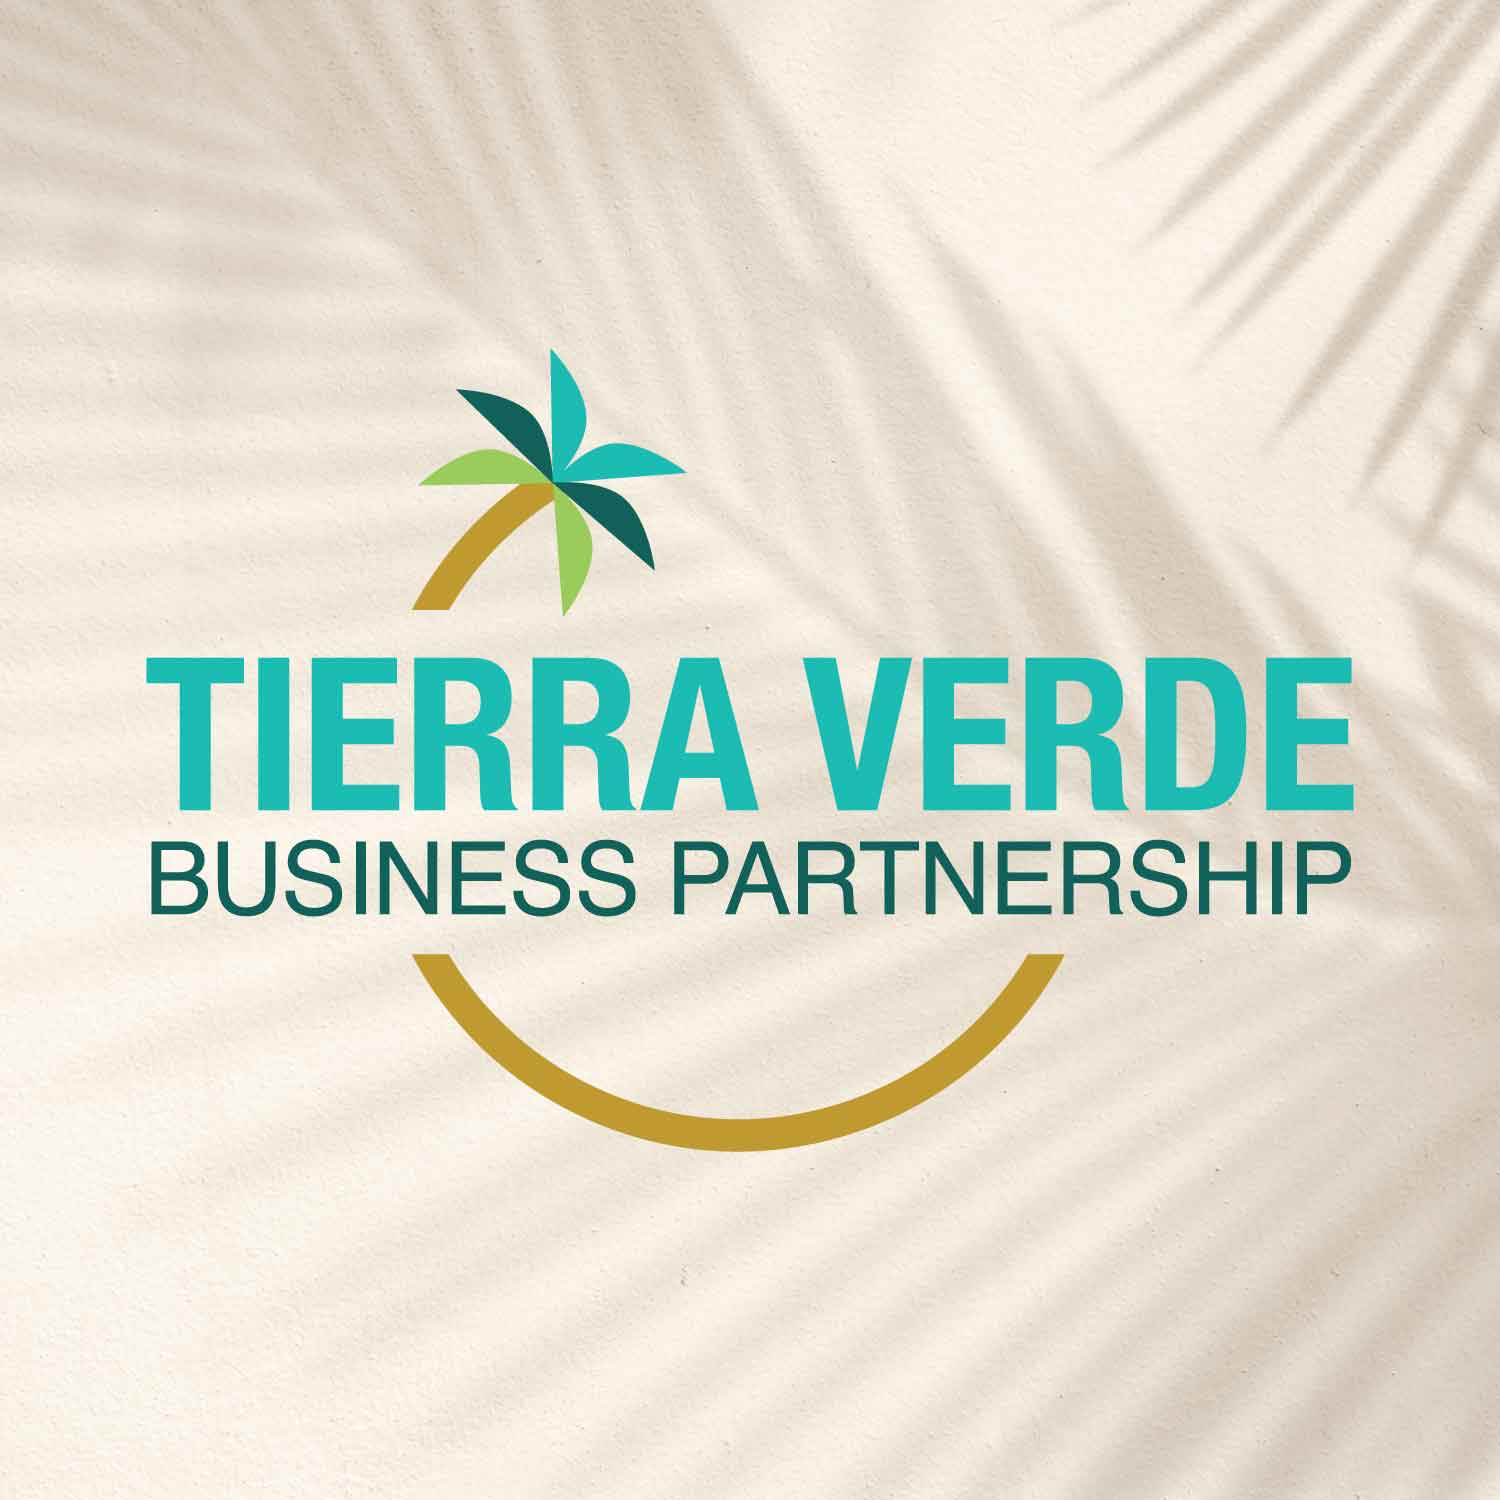 Tierra Verde Business Partnership Logo Design